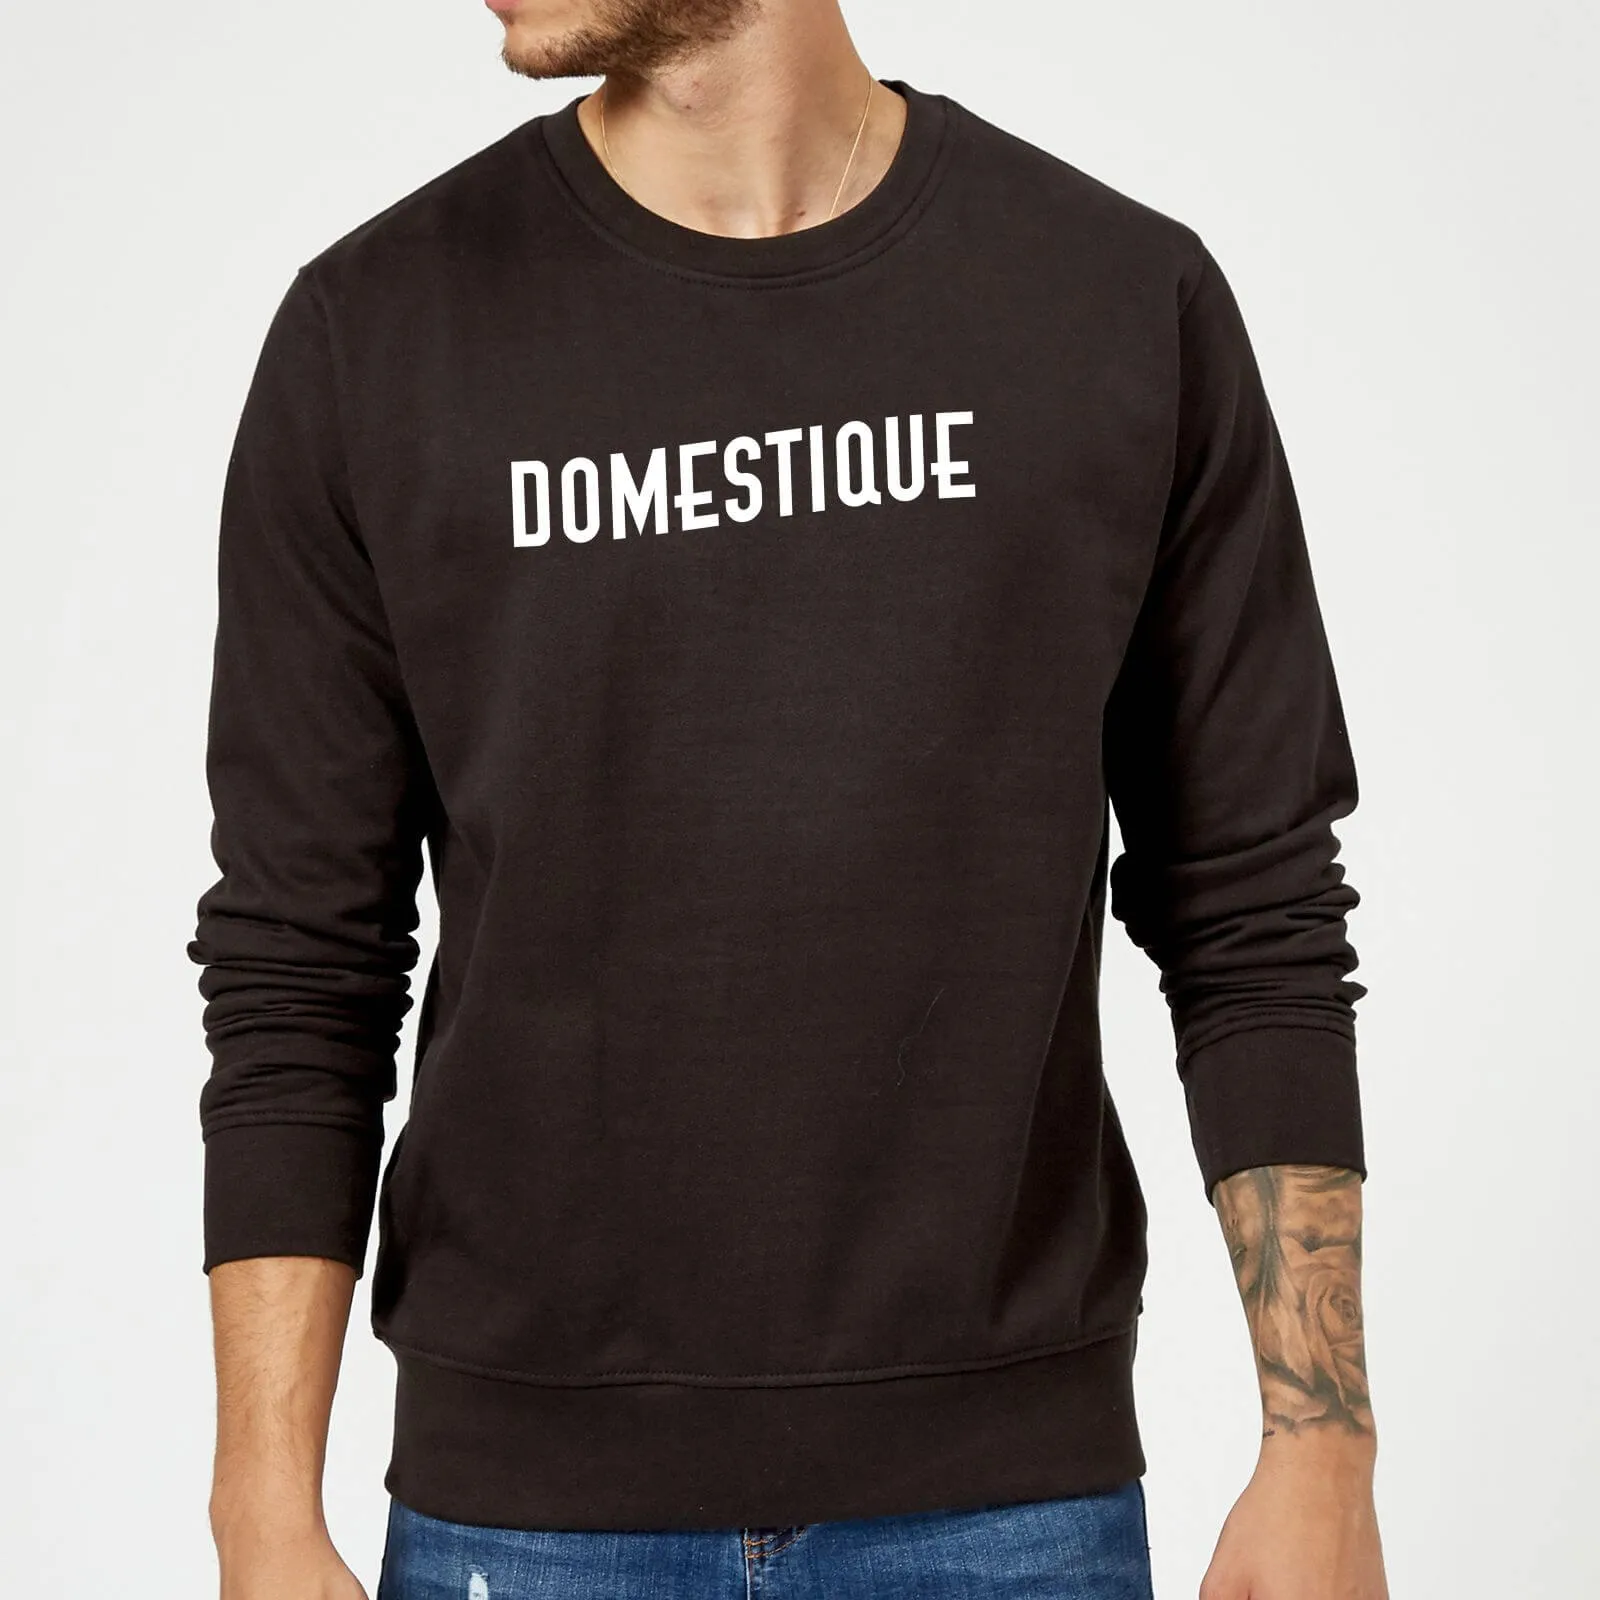 Domestique Sweatshirt - S - Bianco